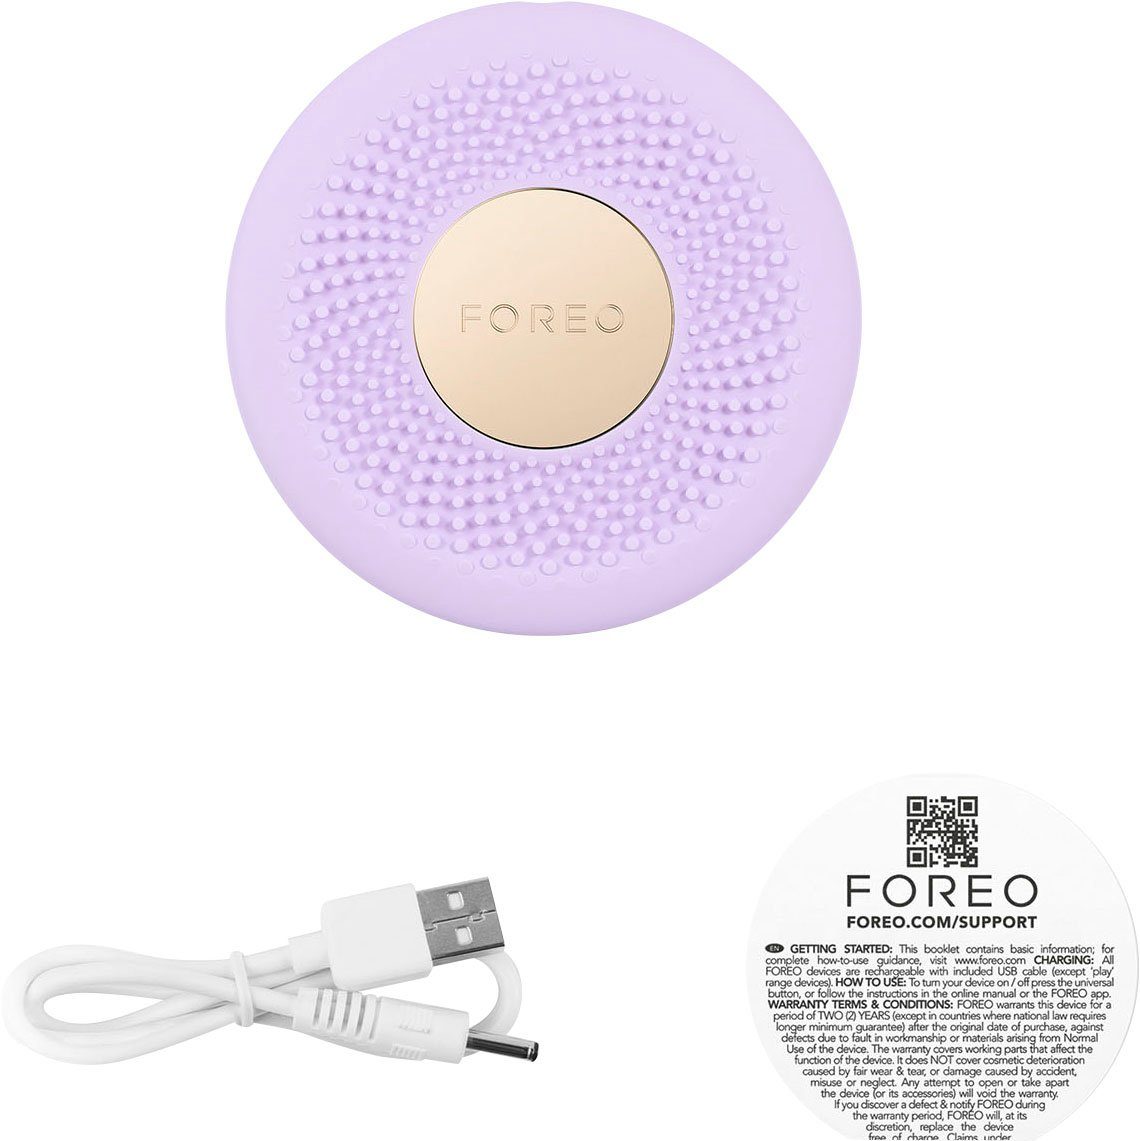 Kosmetikbehandlungsgerät FOREO UFO™ 3 Lavender go